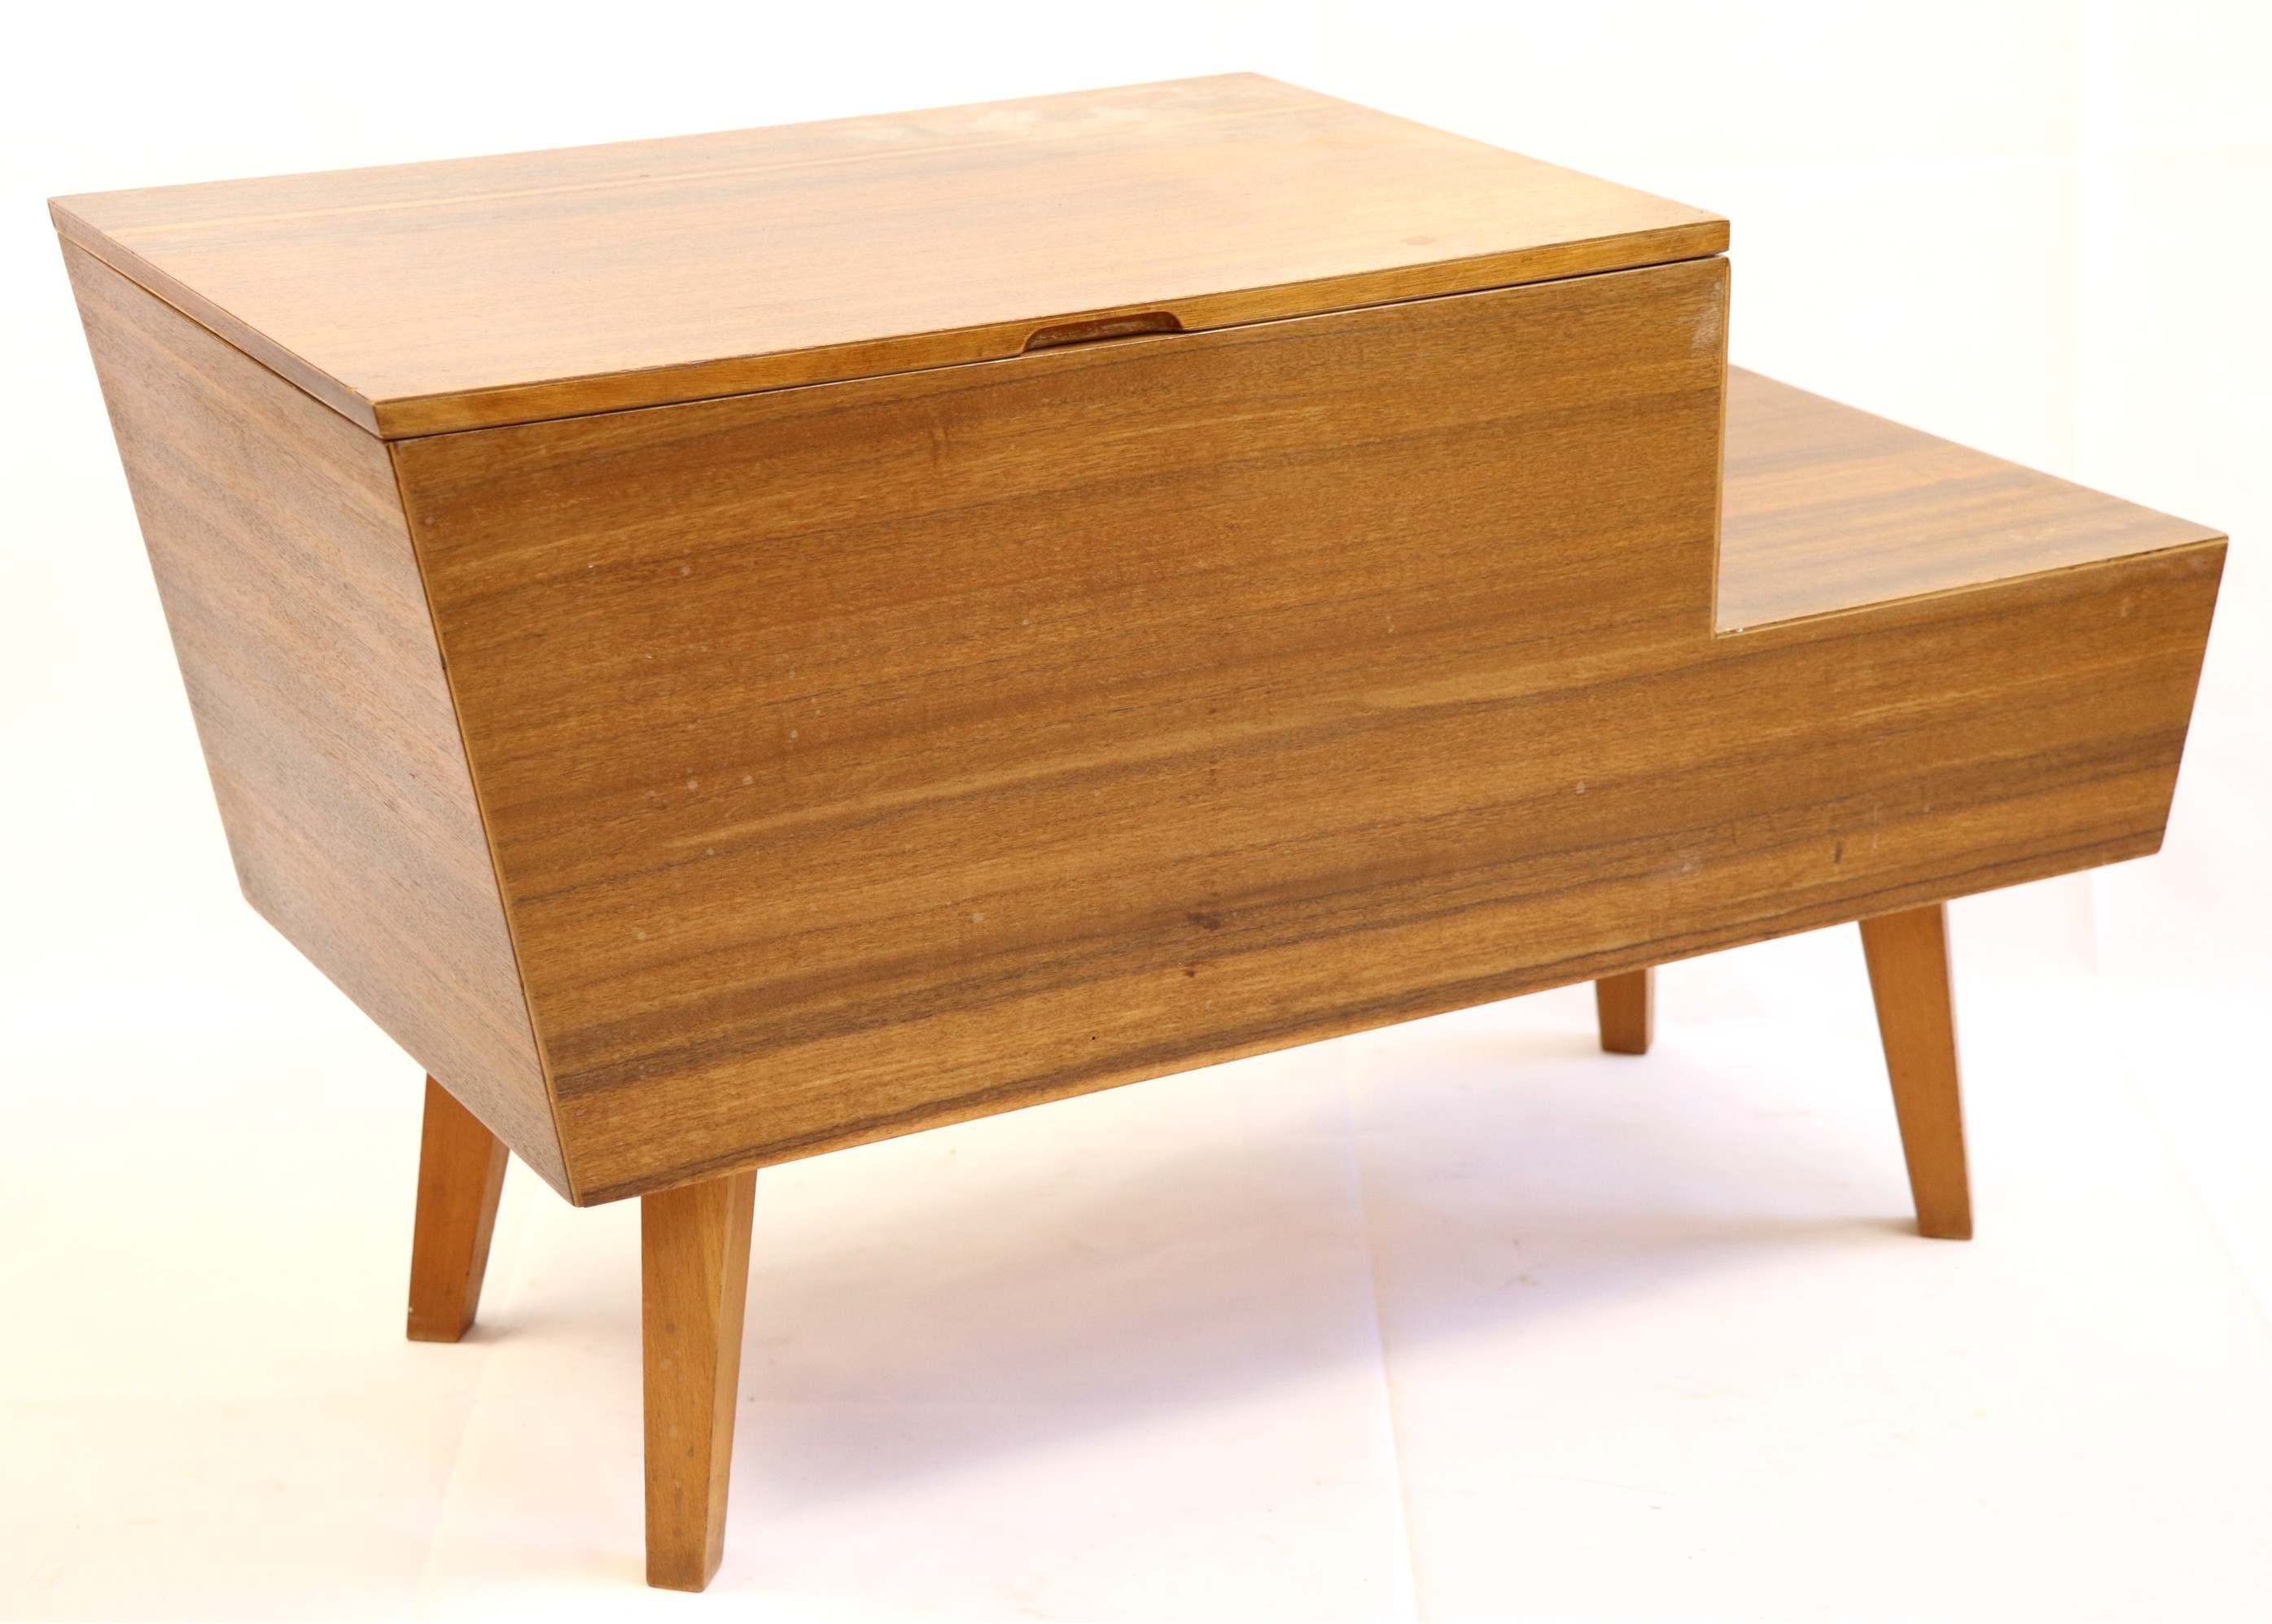 A mid-20th Century teak sewing box / table, 75 cm x 33 cm x 46 cm